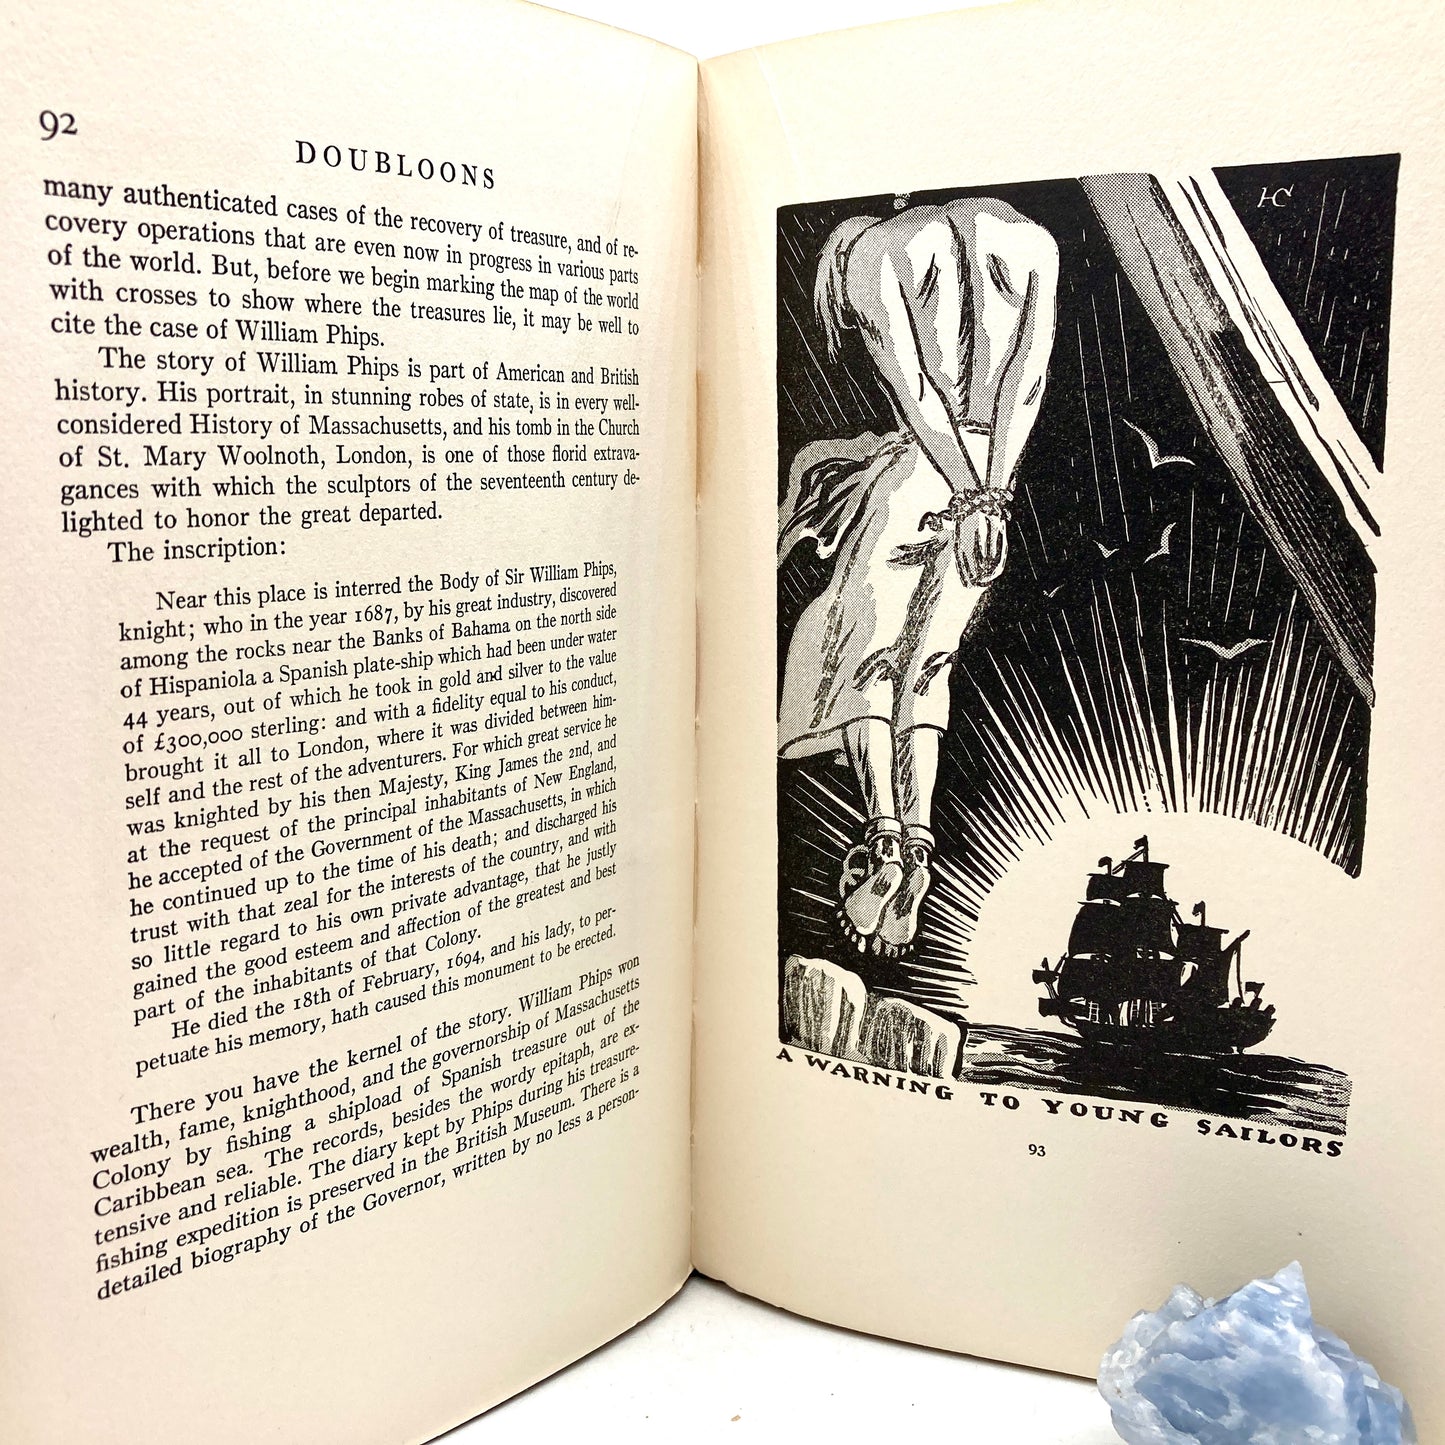 DRISCOLL, Charles B. "Doubloons, The Story of Buried Treasure" [Farrar & Rinehart, 1930]